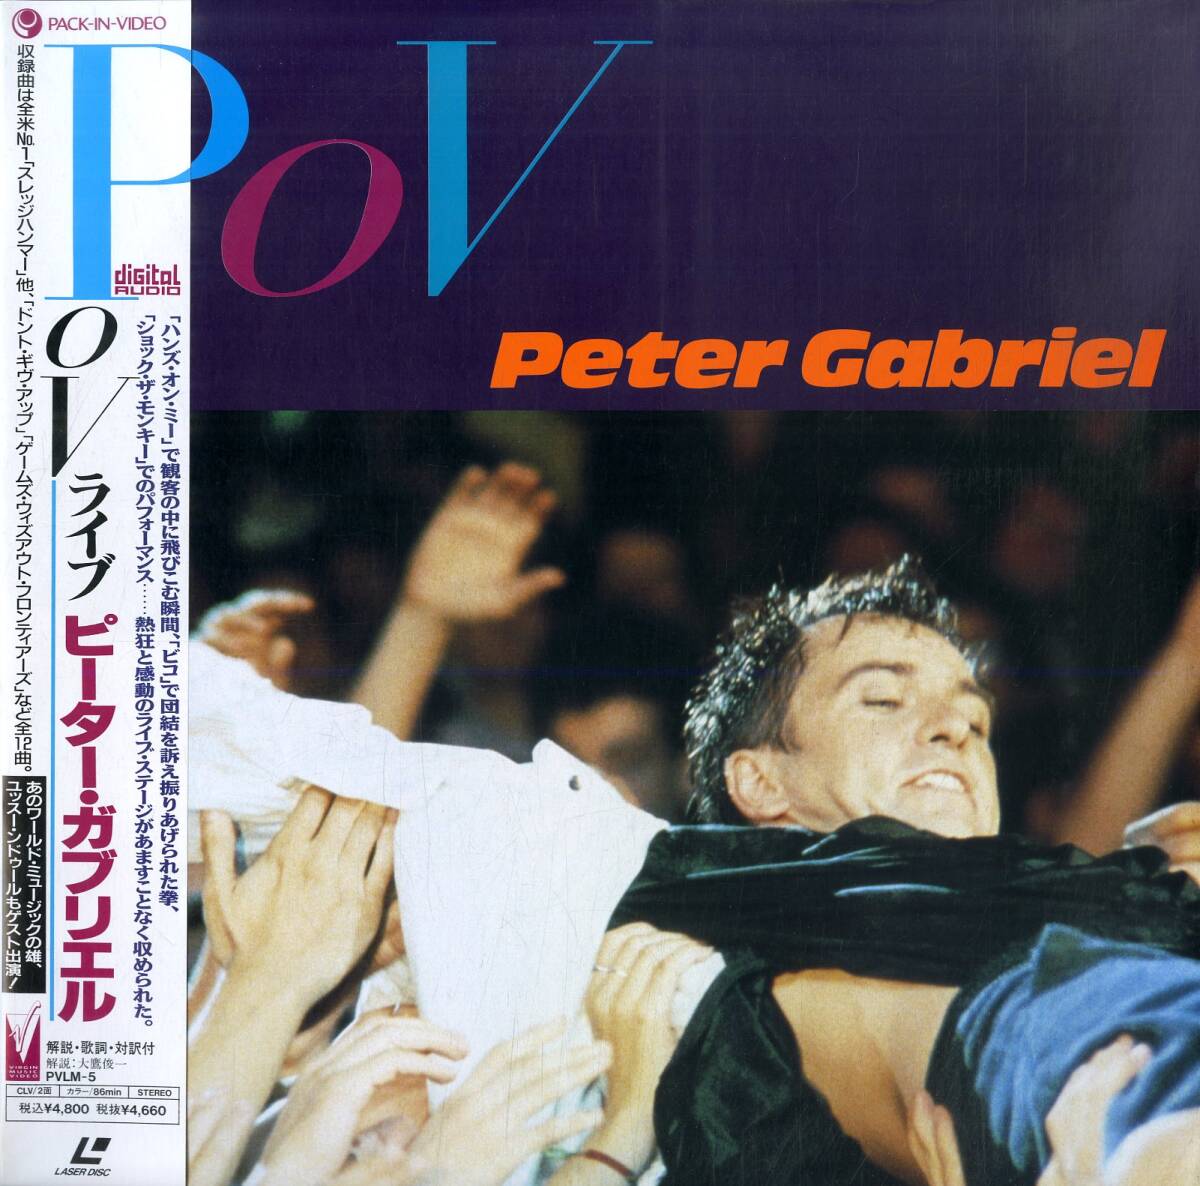 B00183016/LD/ピーター・ガブリエル (PETER GABRIEL・ジェネシス・GENESIS)「PoV Live (1990年・PVLM-5・アートロック)」_画像1